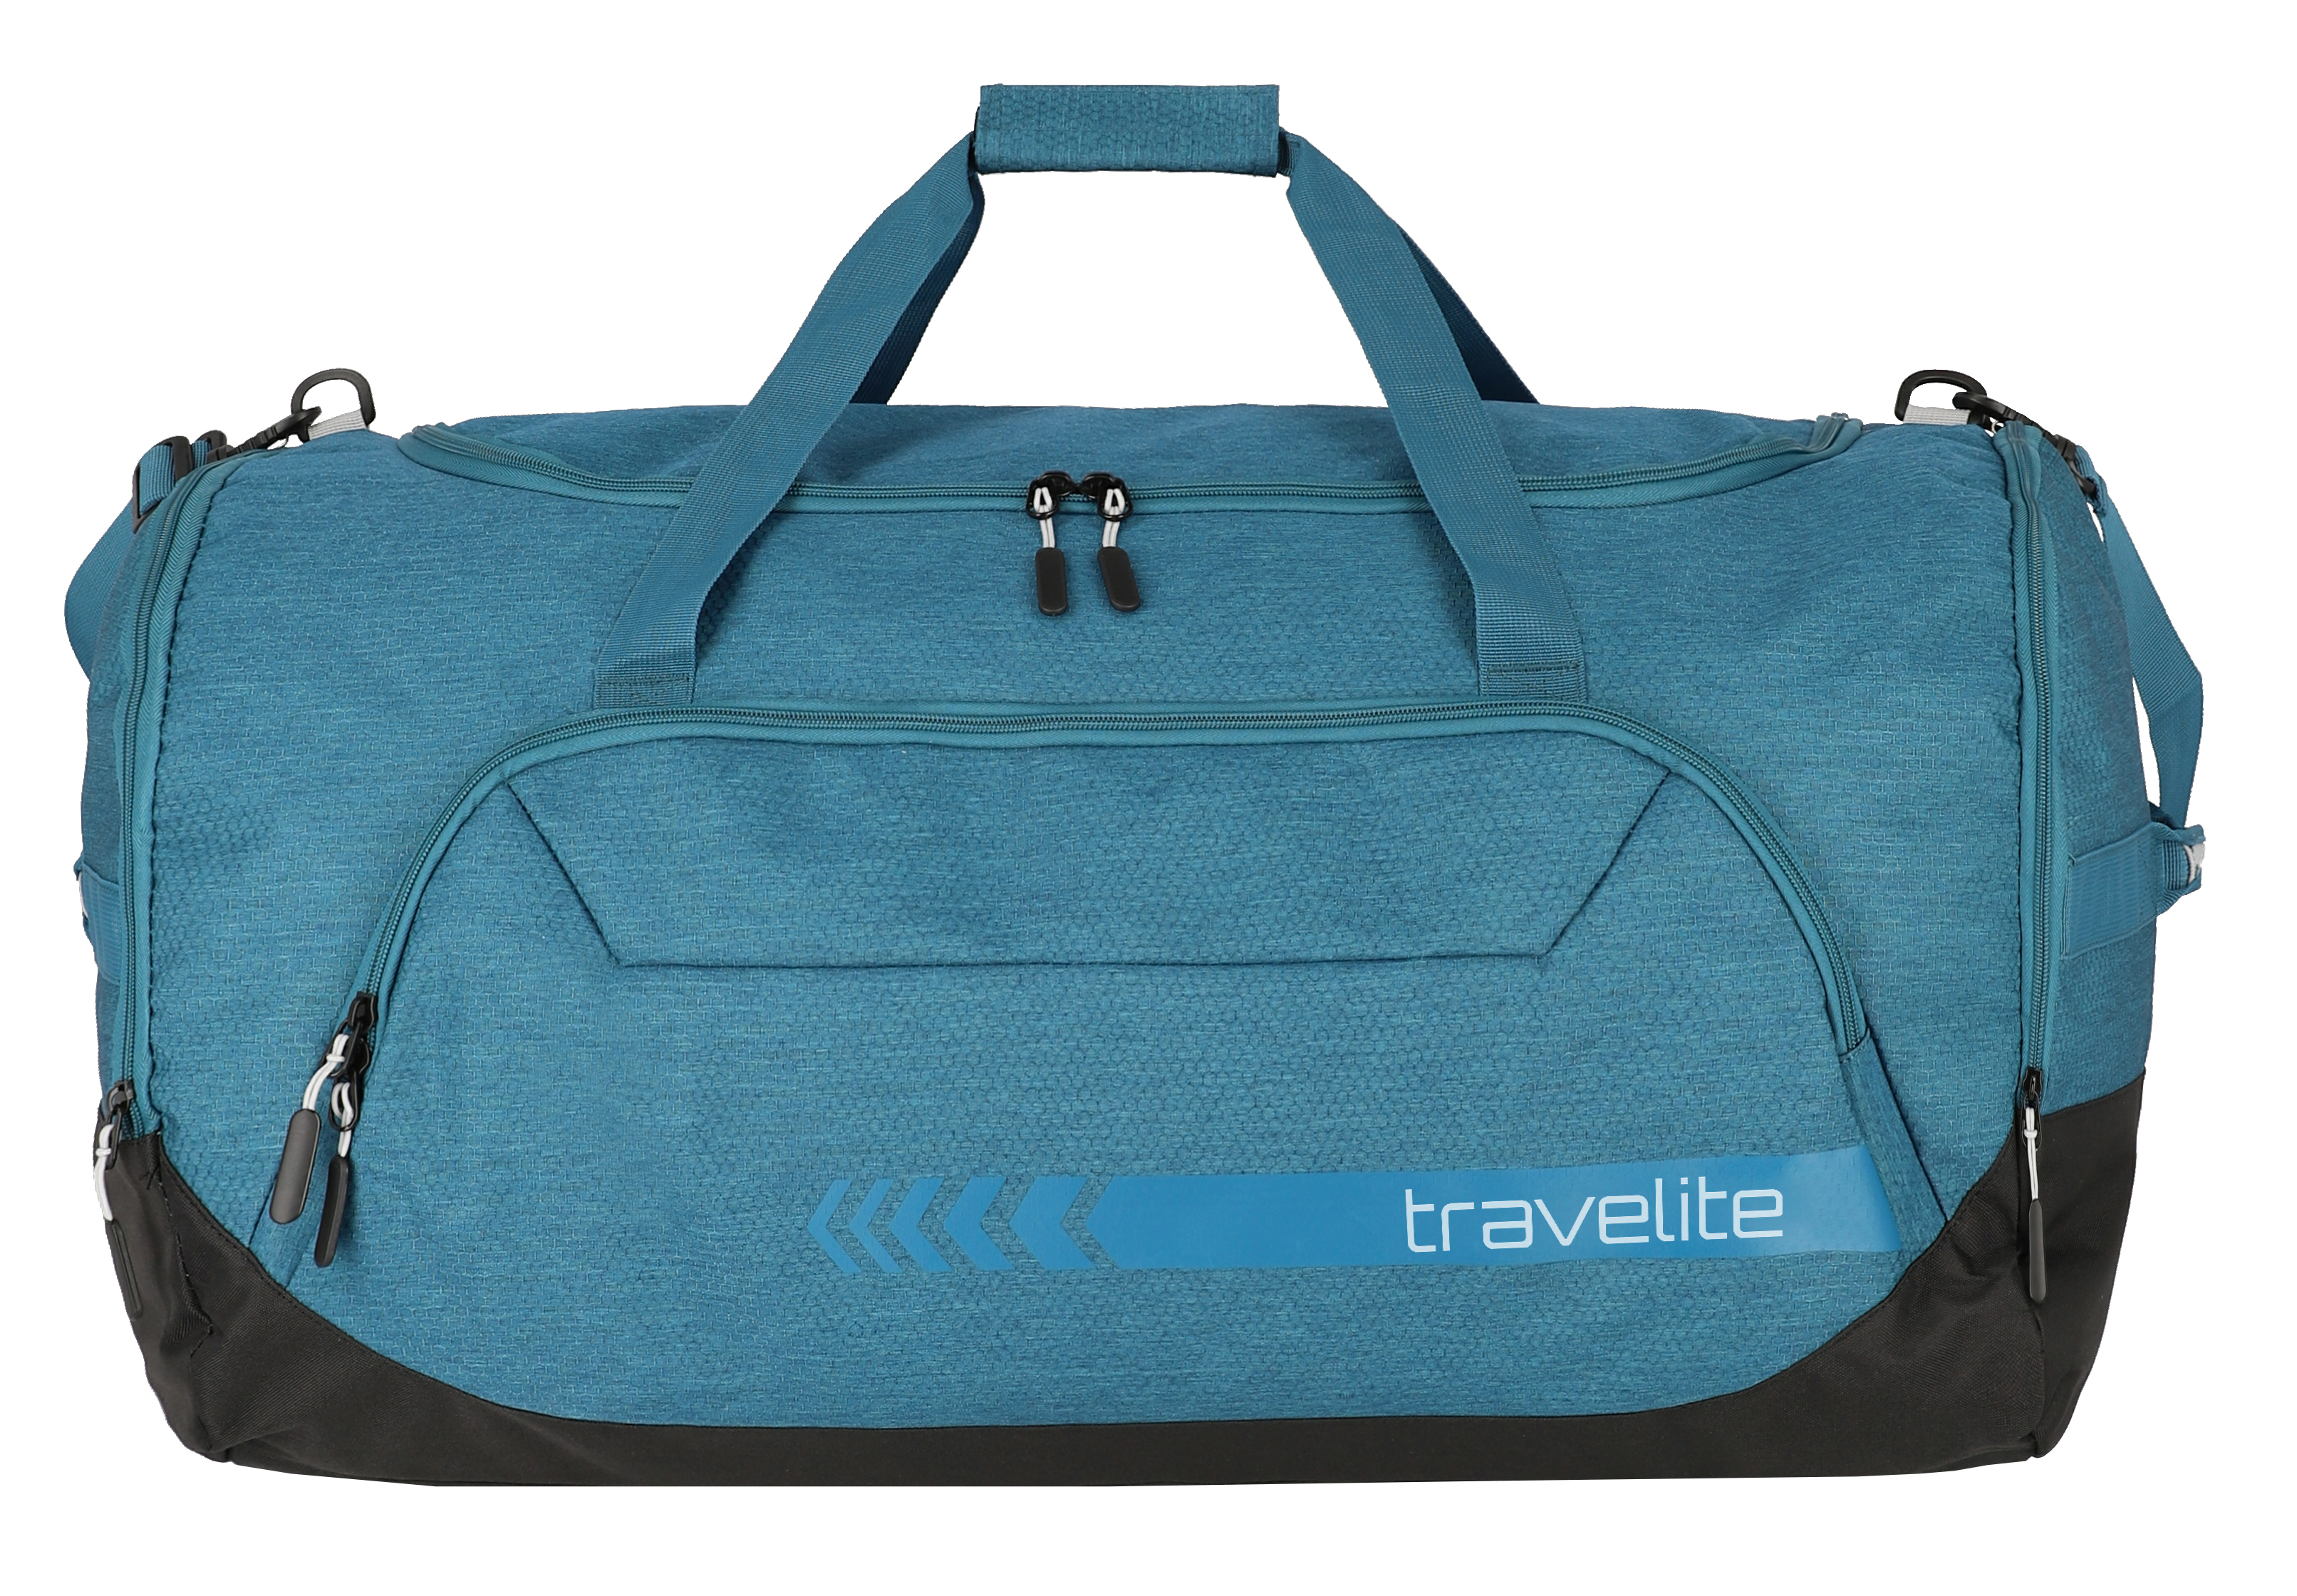 travelite  Kick Off Reisetasche XL - Duffle Bag - Petrol (Petrol)